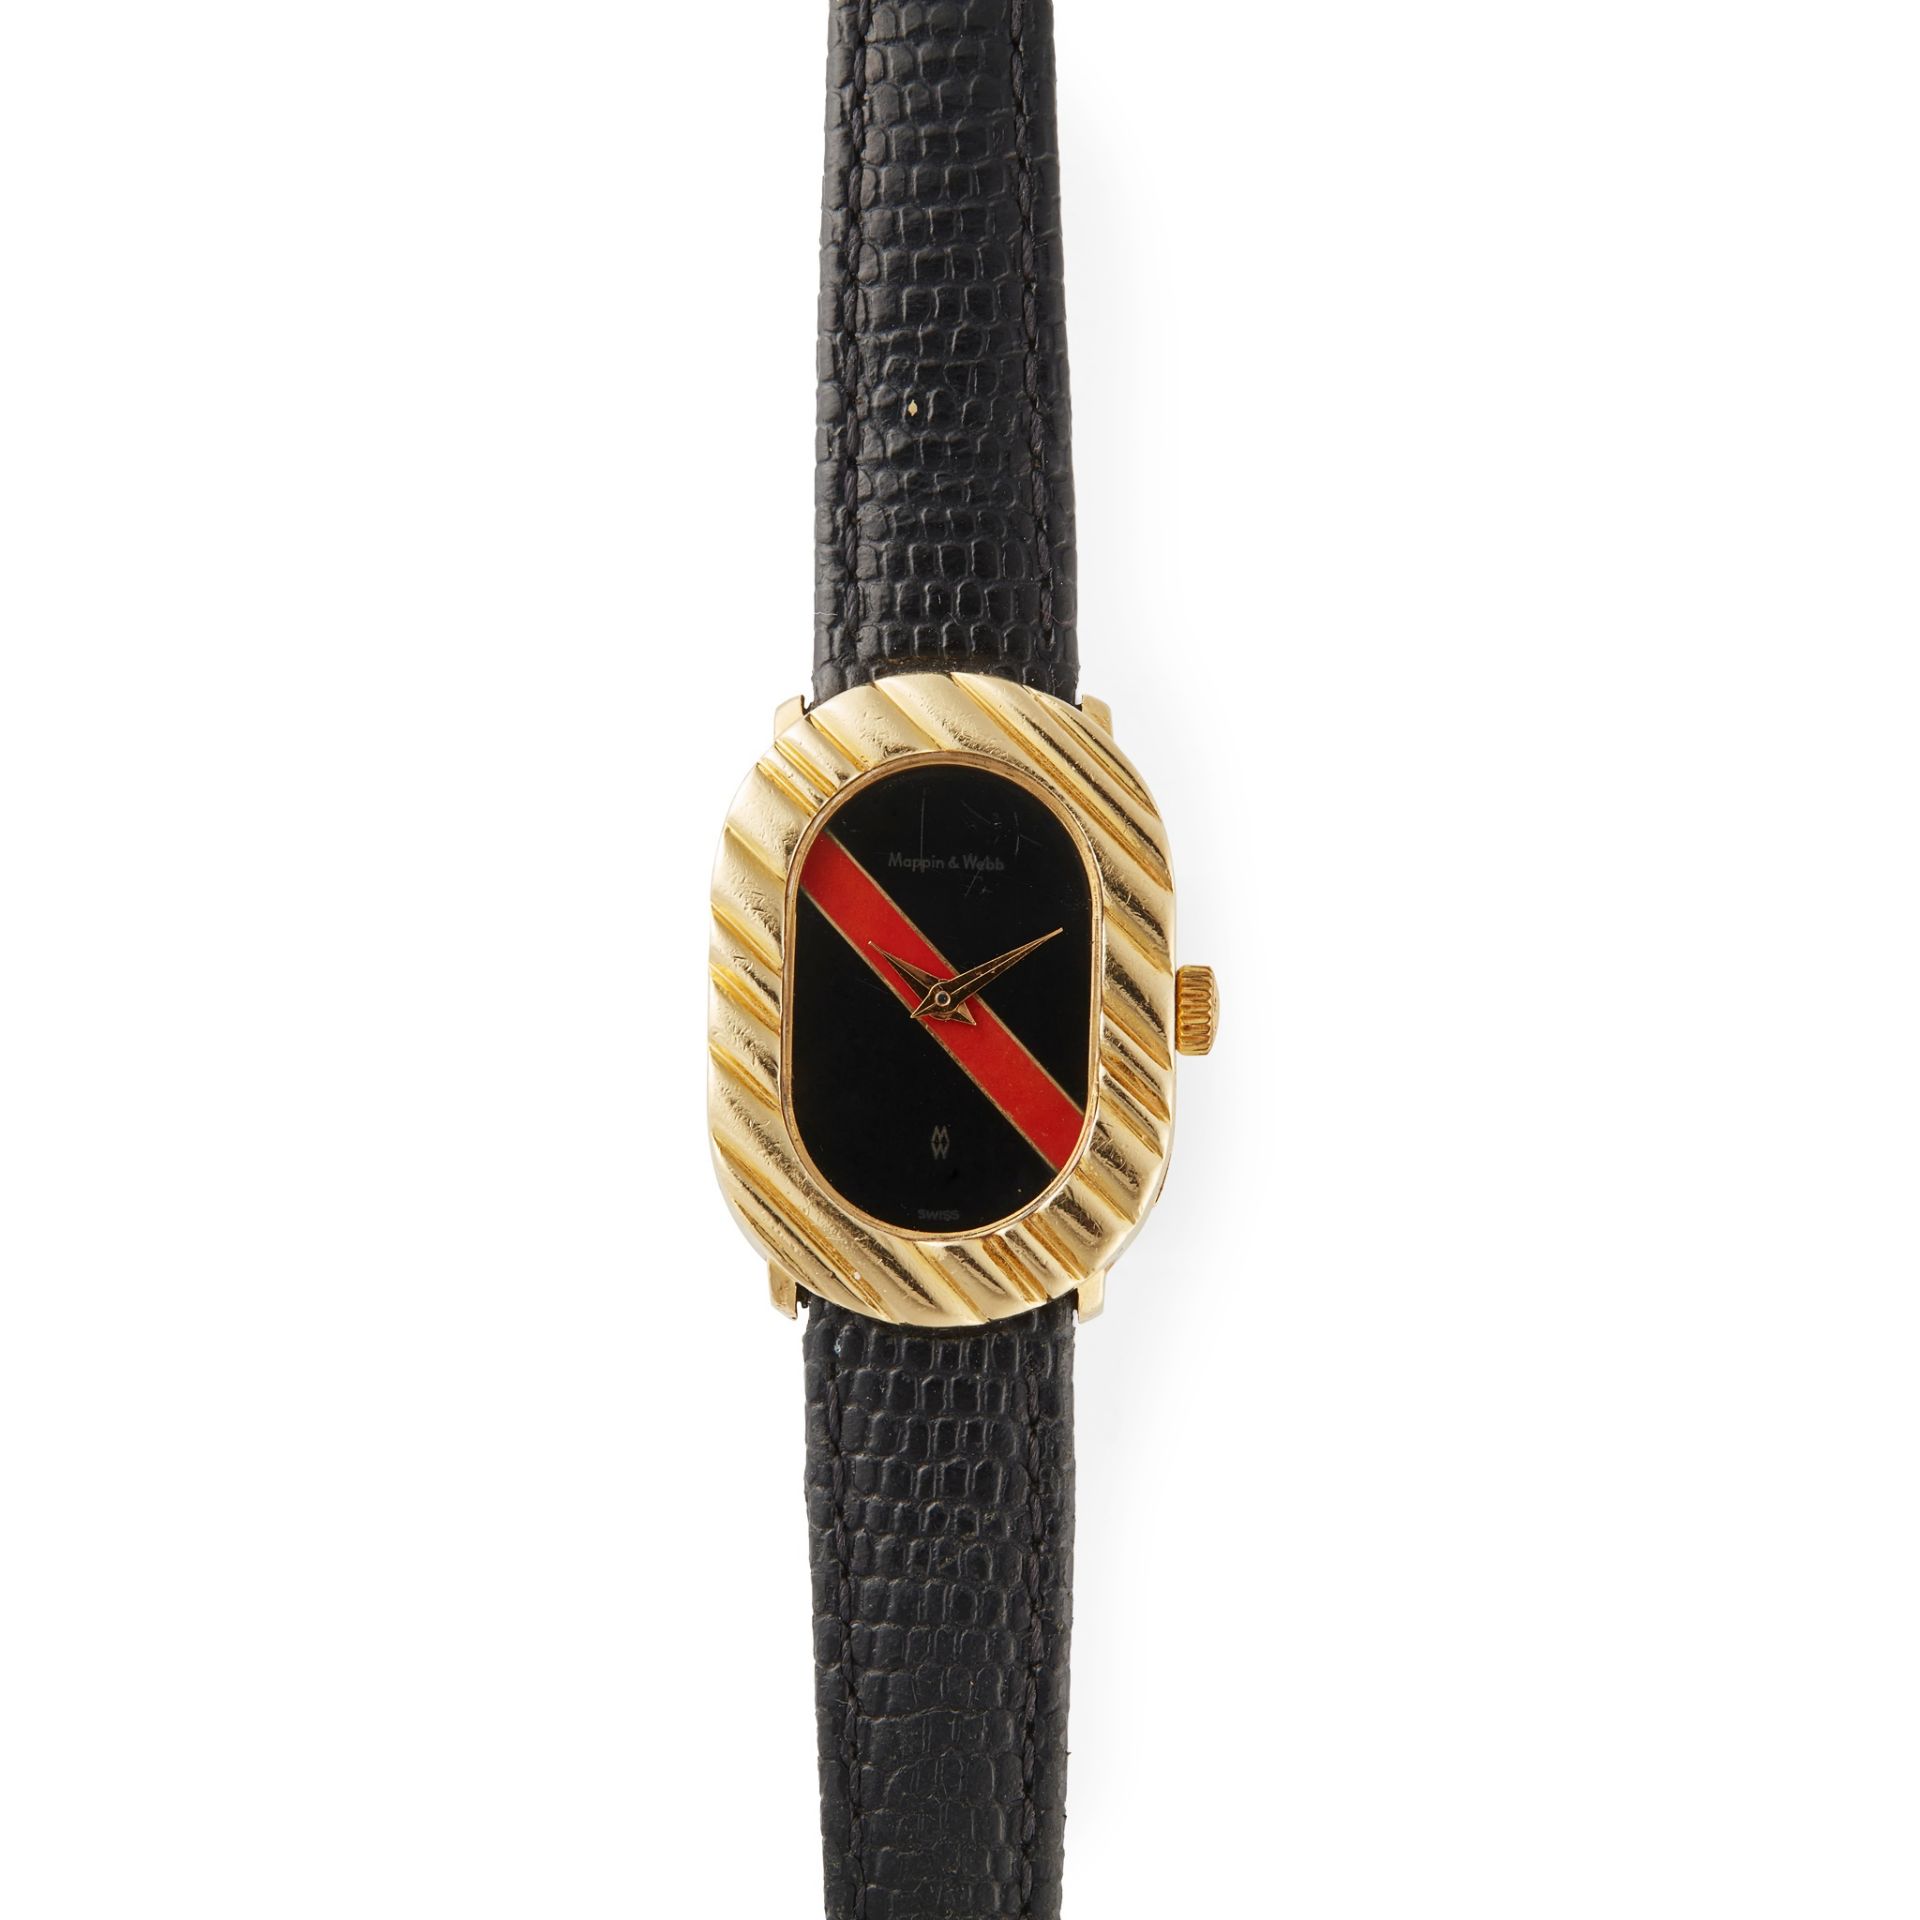 Mappin & Webb: a lady's gold wrist watch